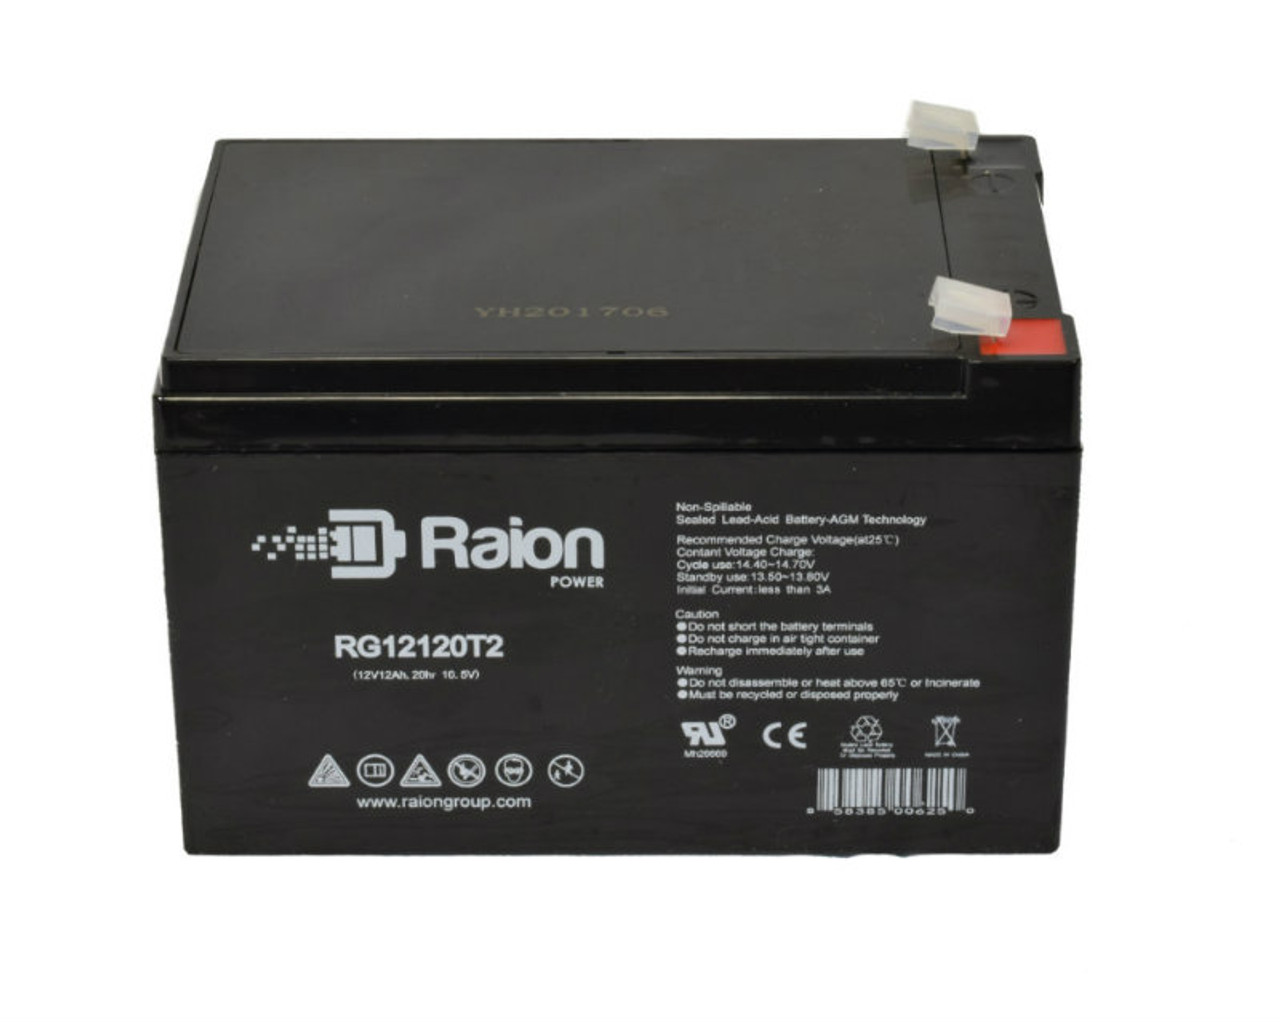 Raion Power RG12120T2 SLA Battery for MHB MS12-12A